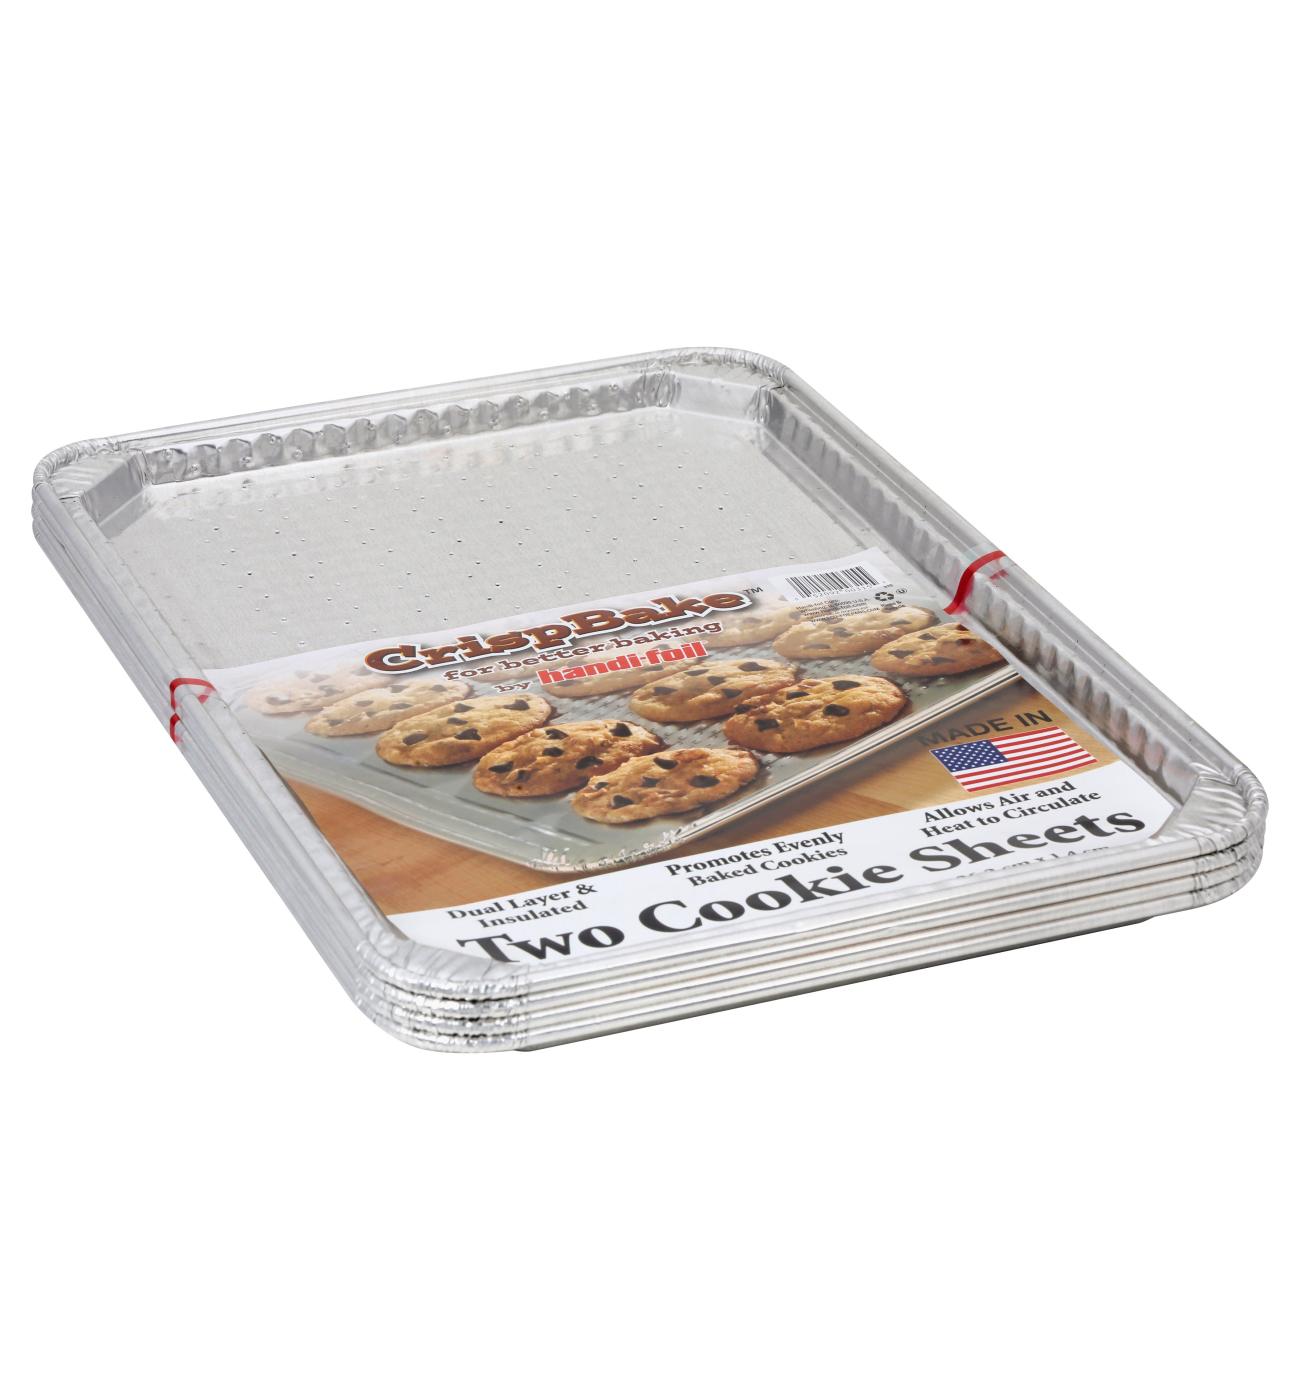 Handi-Foil CrispBake Cookie Sheets - Shop Bakeware at H-E-B